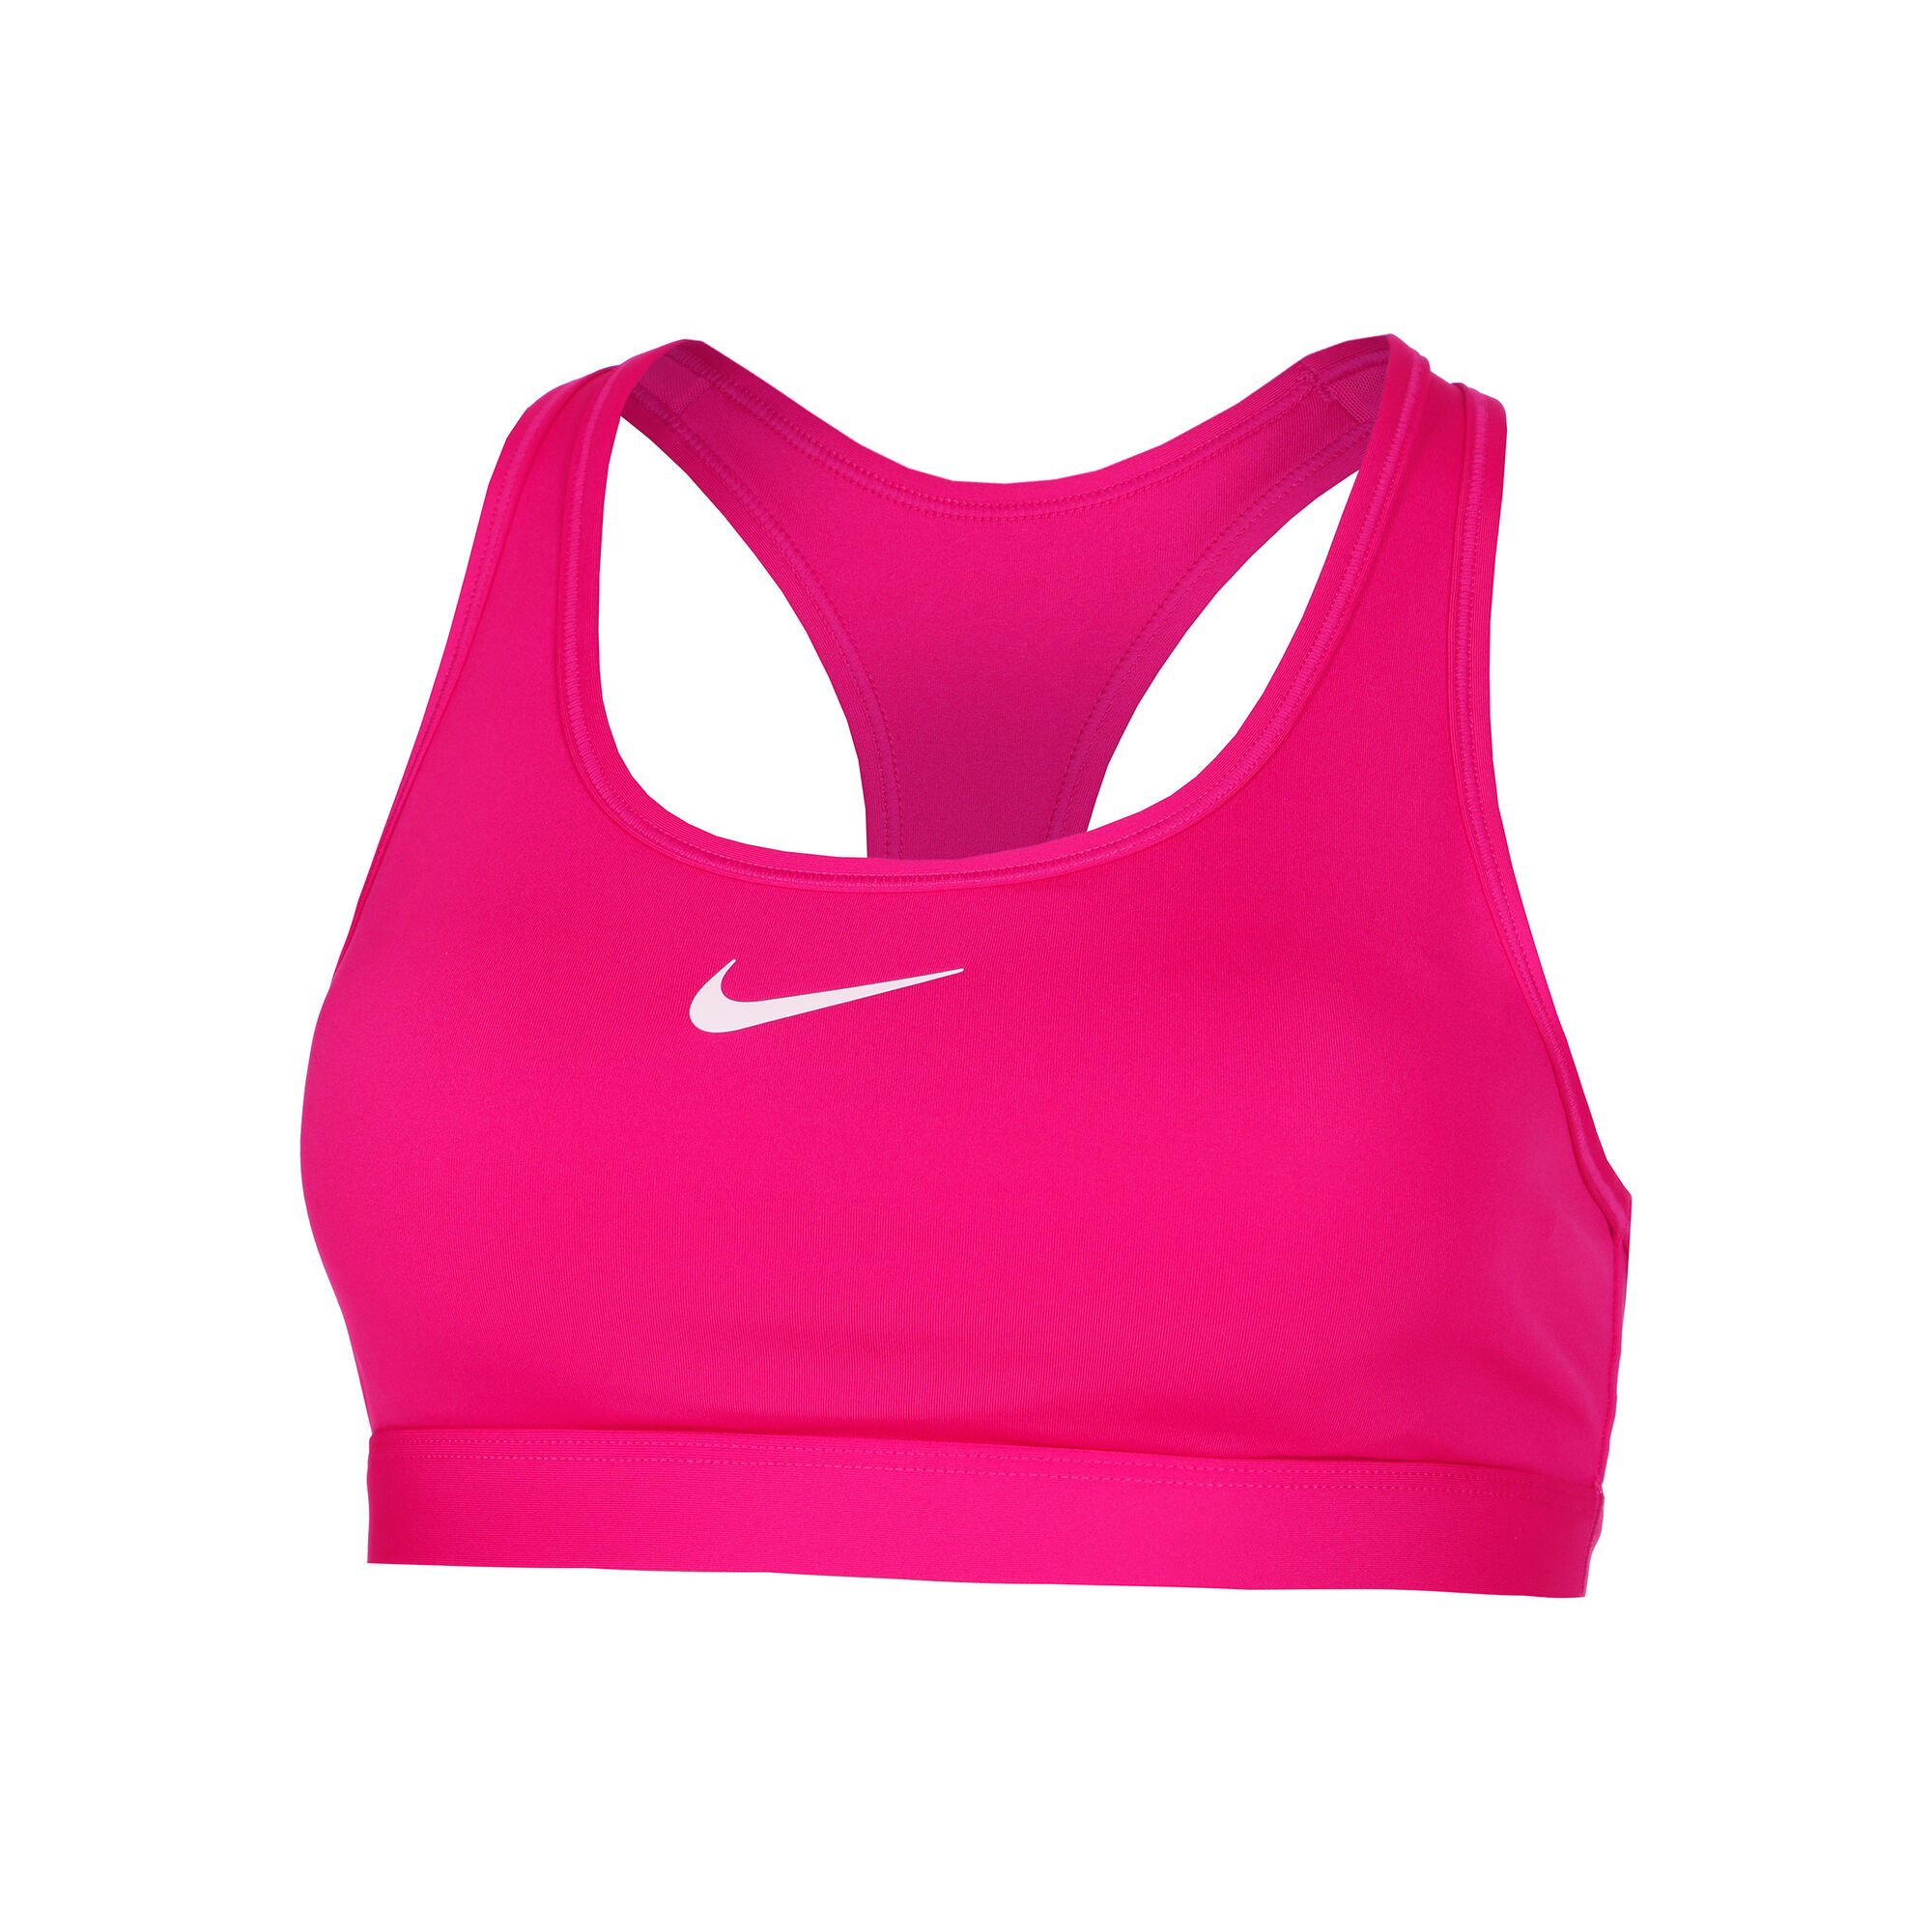 Buy Nike Swoosh Medium Support Sports Bras Women Pink online